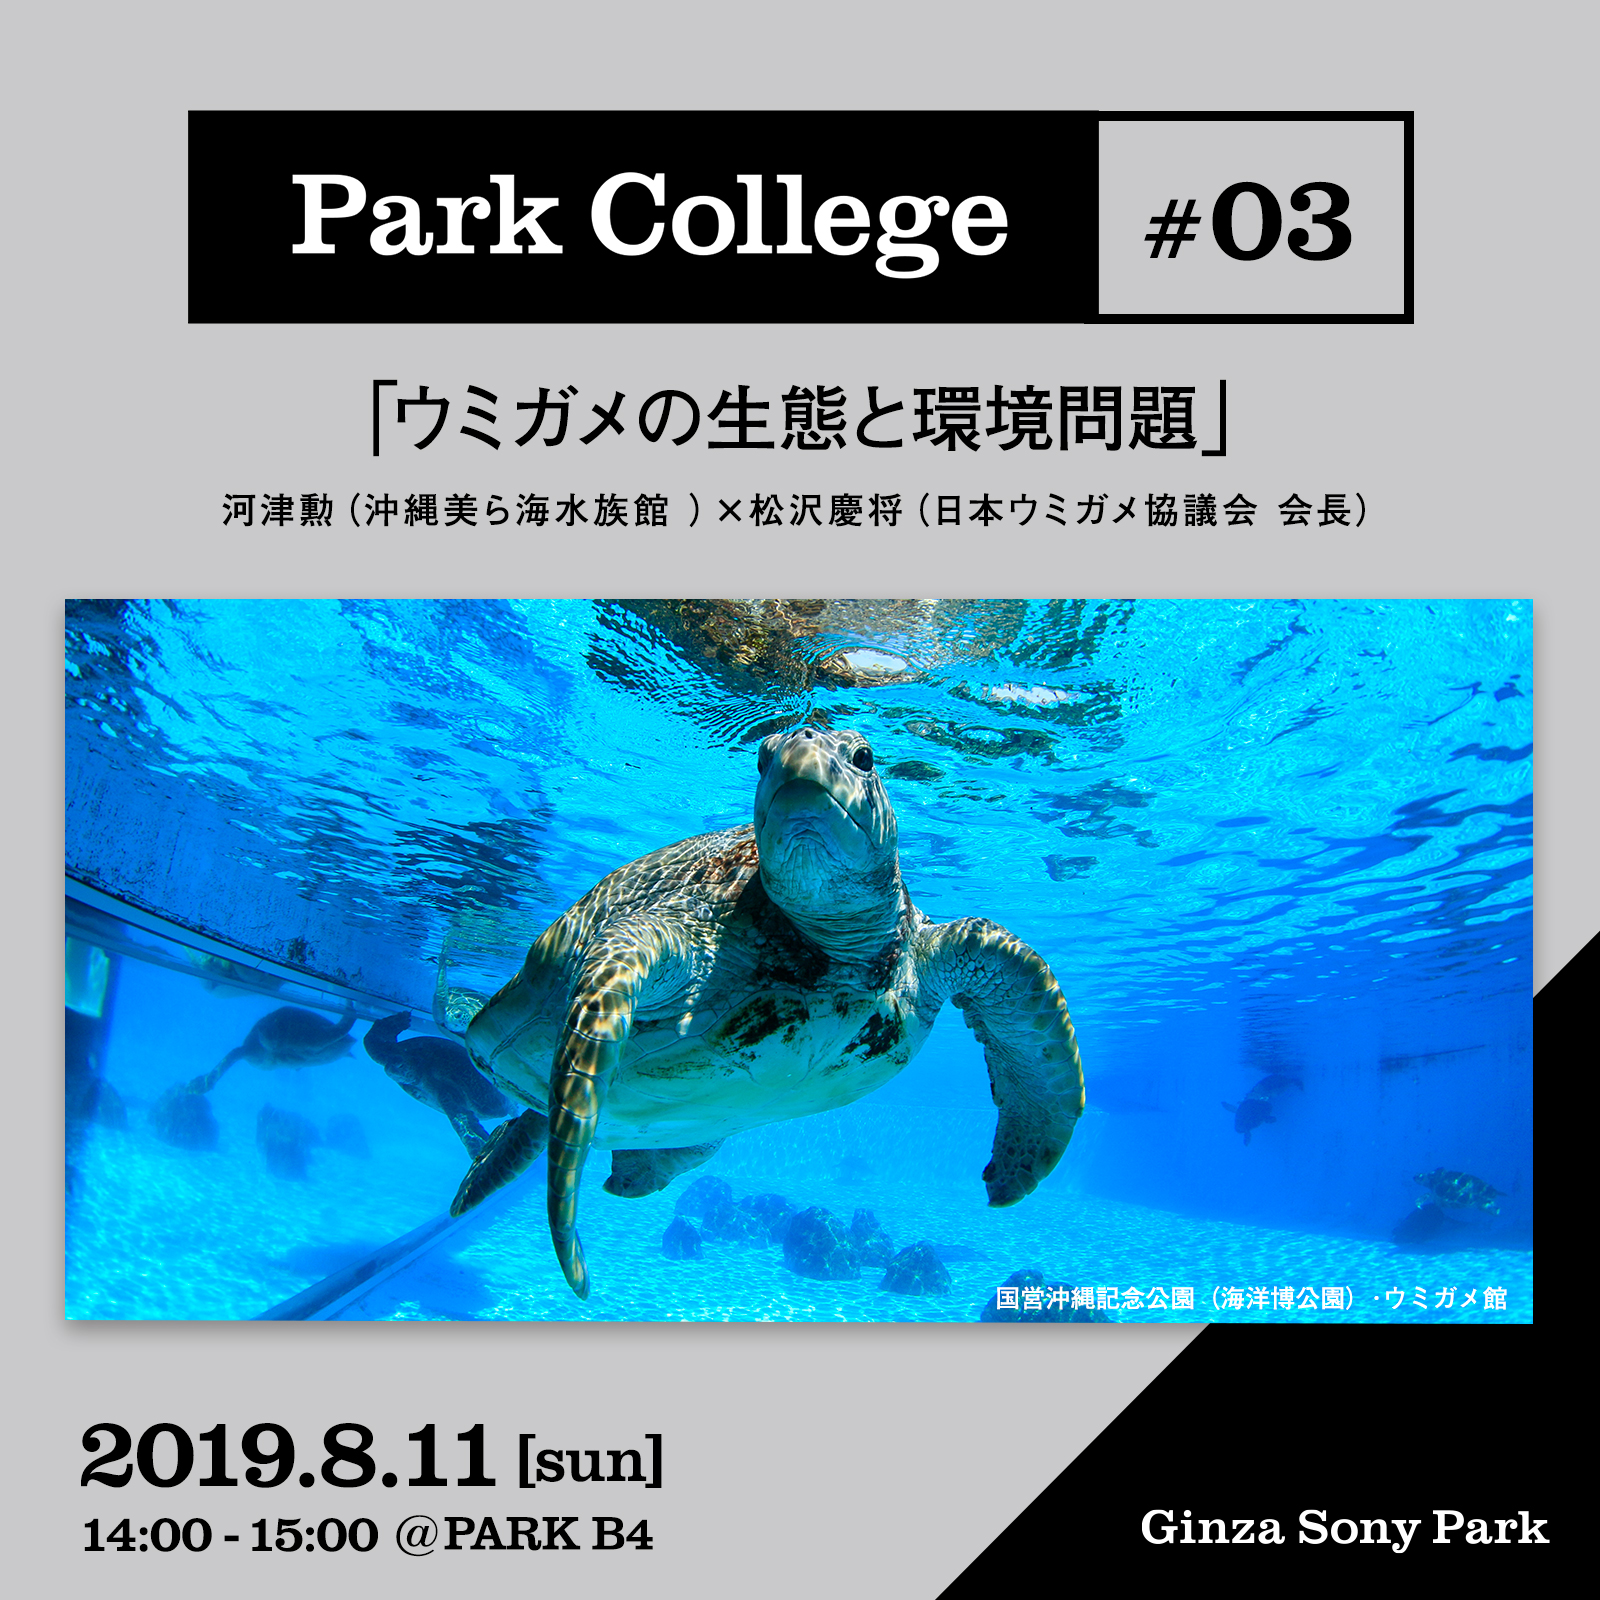 Park College #03 / 「ウミガメの生態と環境問題」 / 河津勲（沖縄美ら海水族館）×松沢慶将（日本ウミガメ協議会 会長）/ 2019.8.11[sun] 14:00 - 15:00 @PARK B4 / Ginza Sony Park